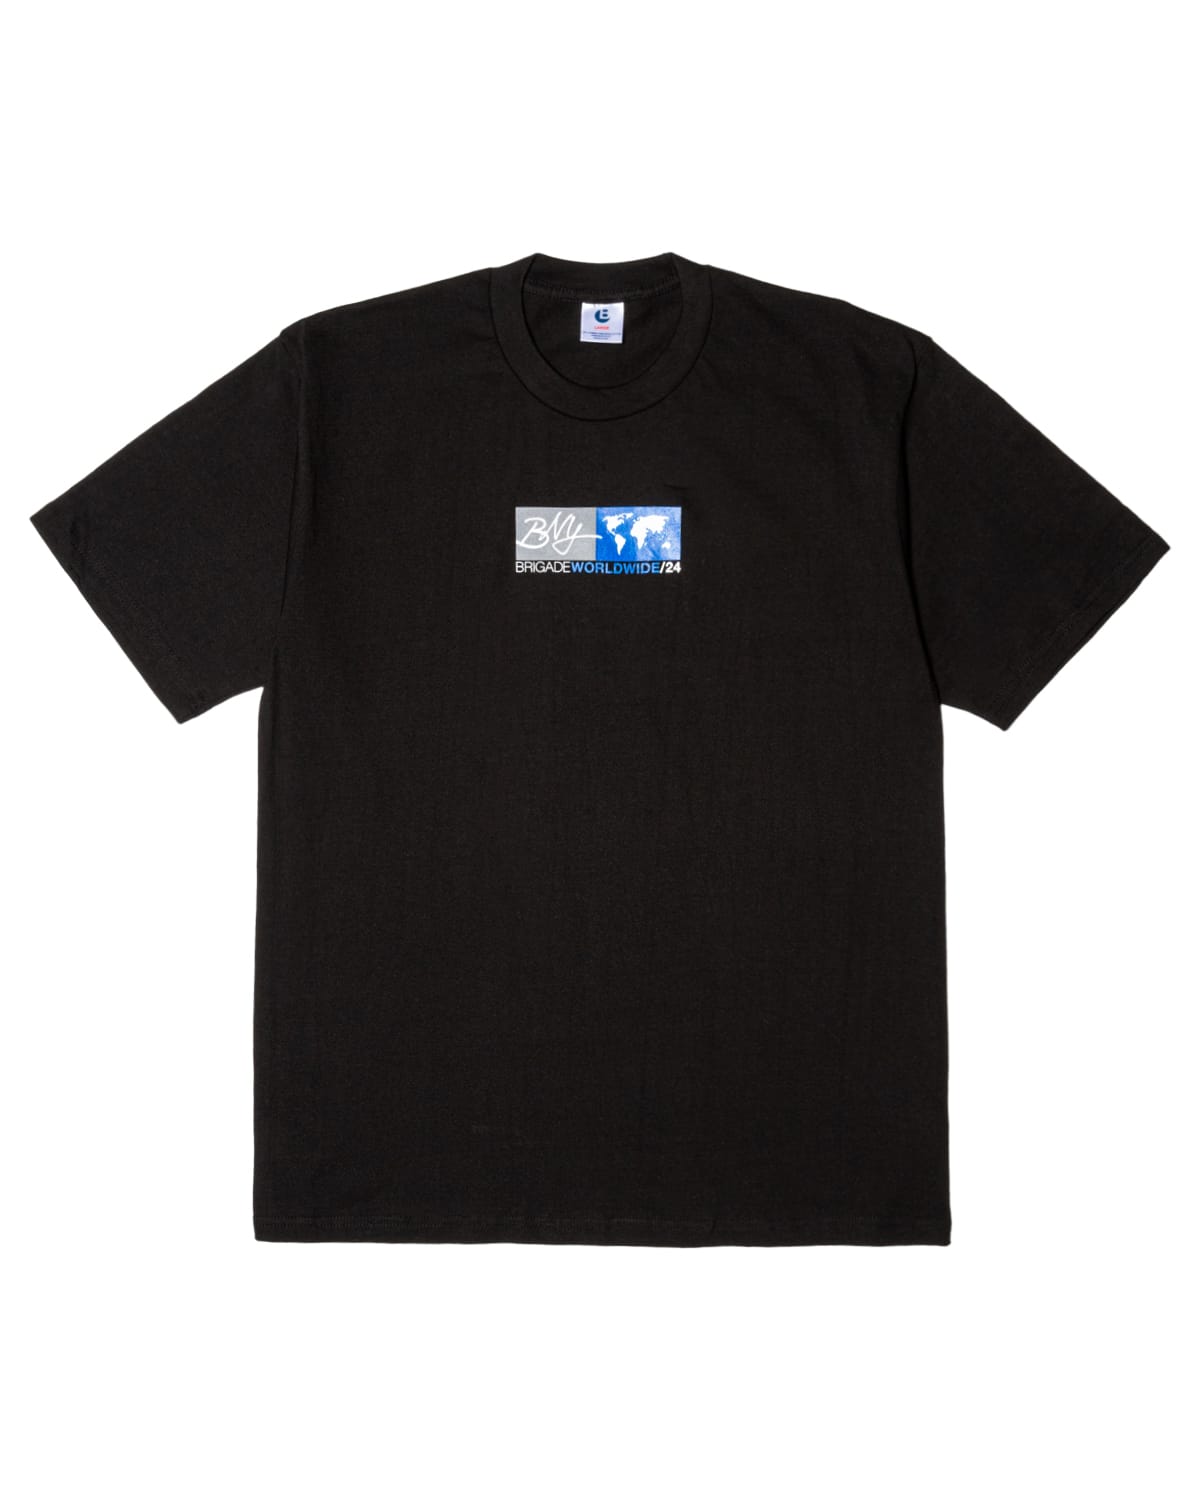 BNY Worldwide T-Shirt